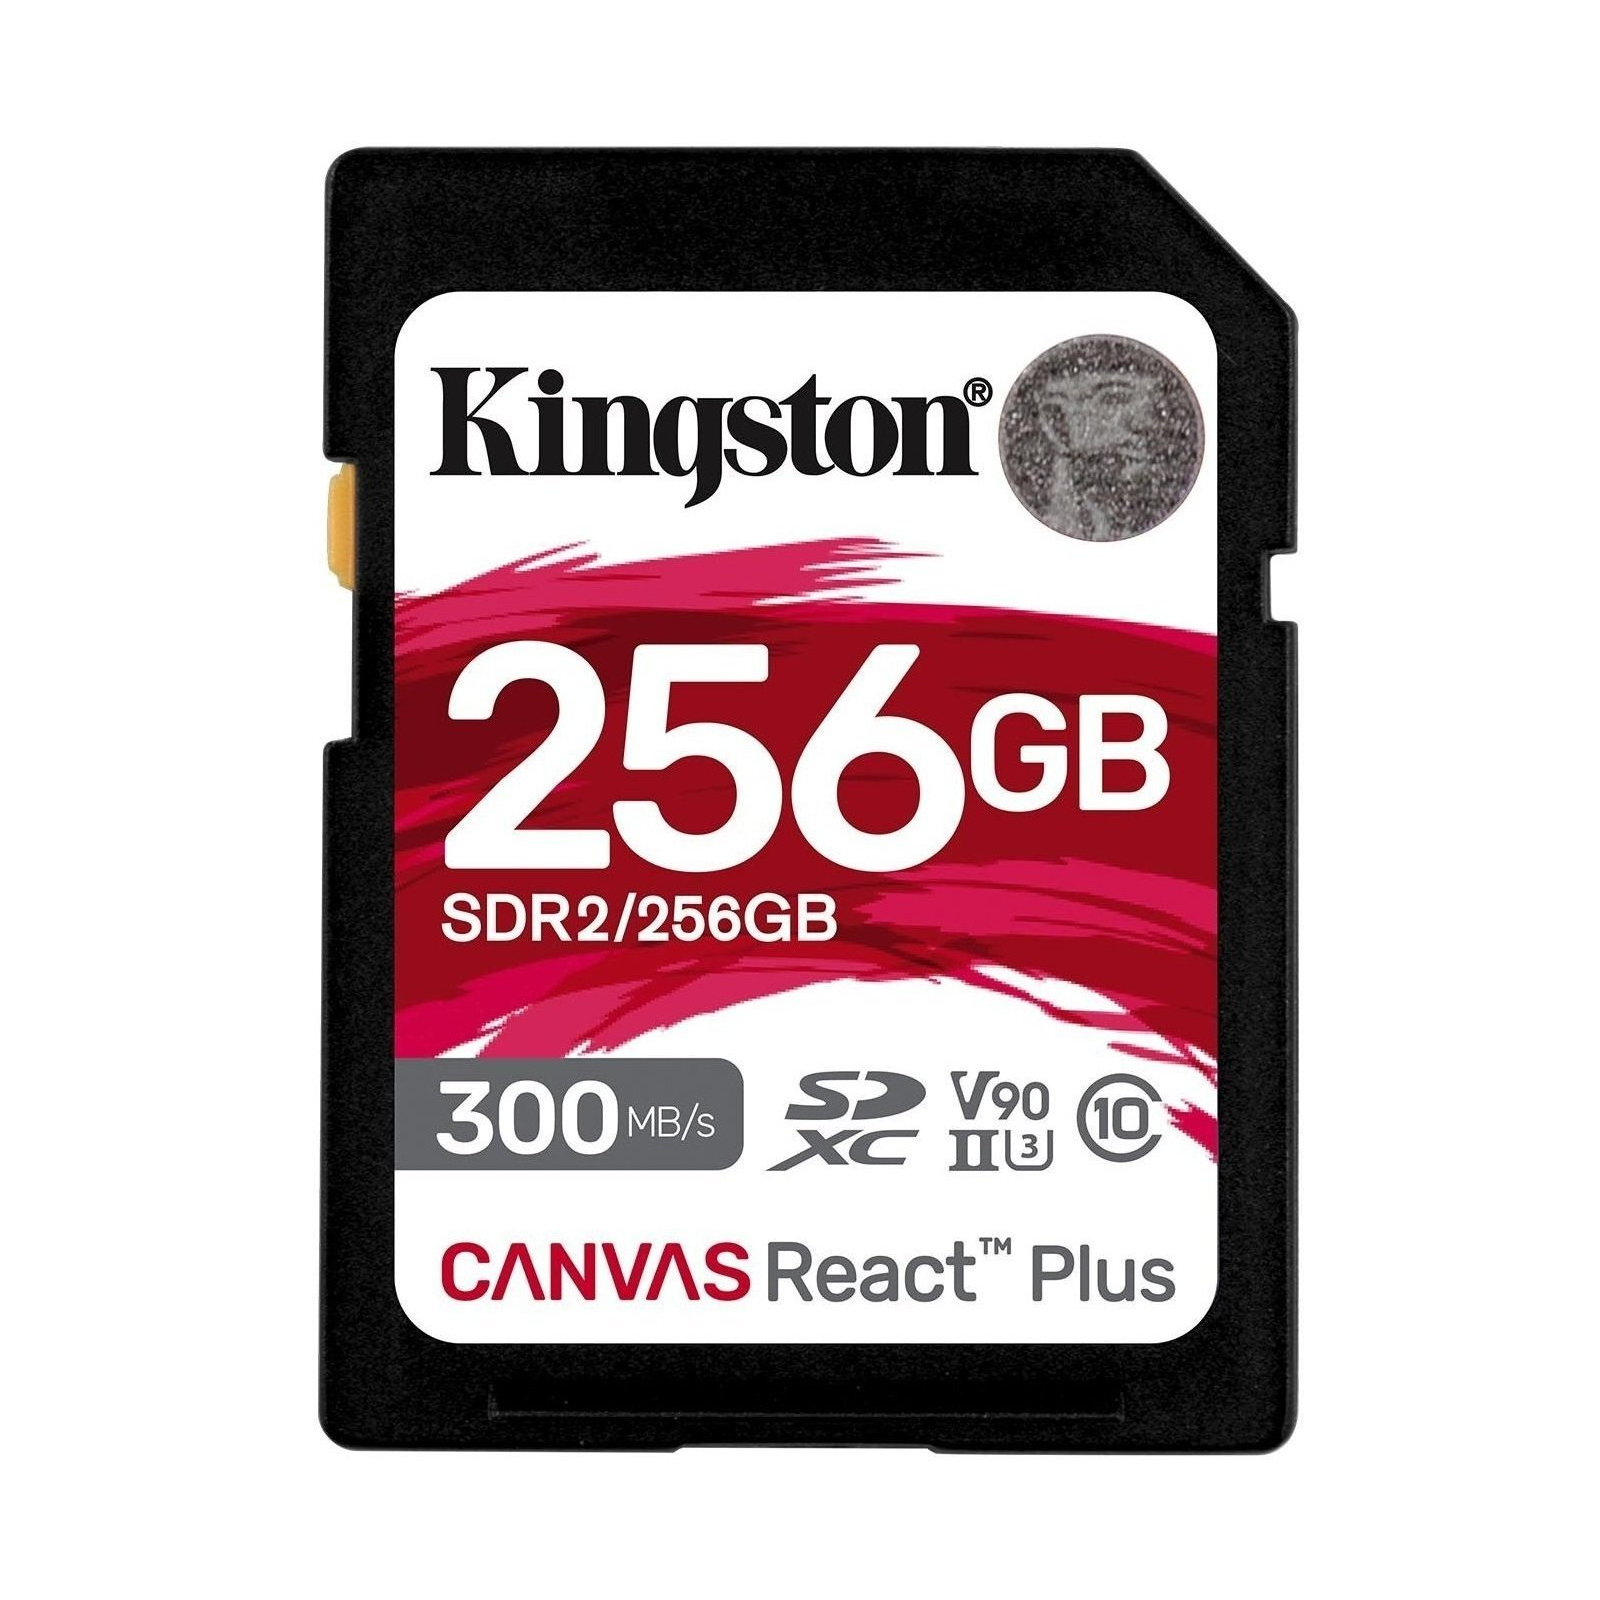 Карта памяти Kingston 64GB class 10 UHS-II U3 Canvas React Plus (SDR2/64GB)